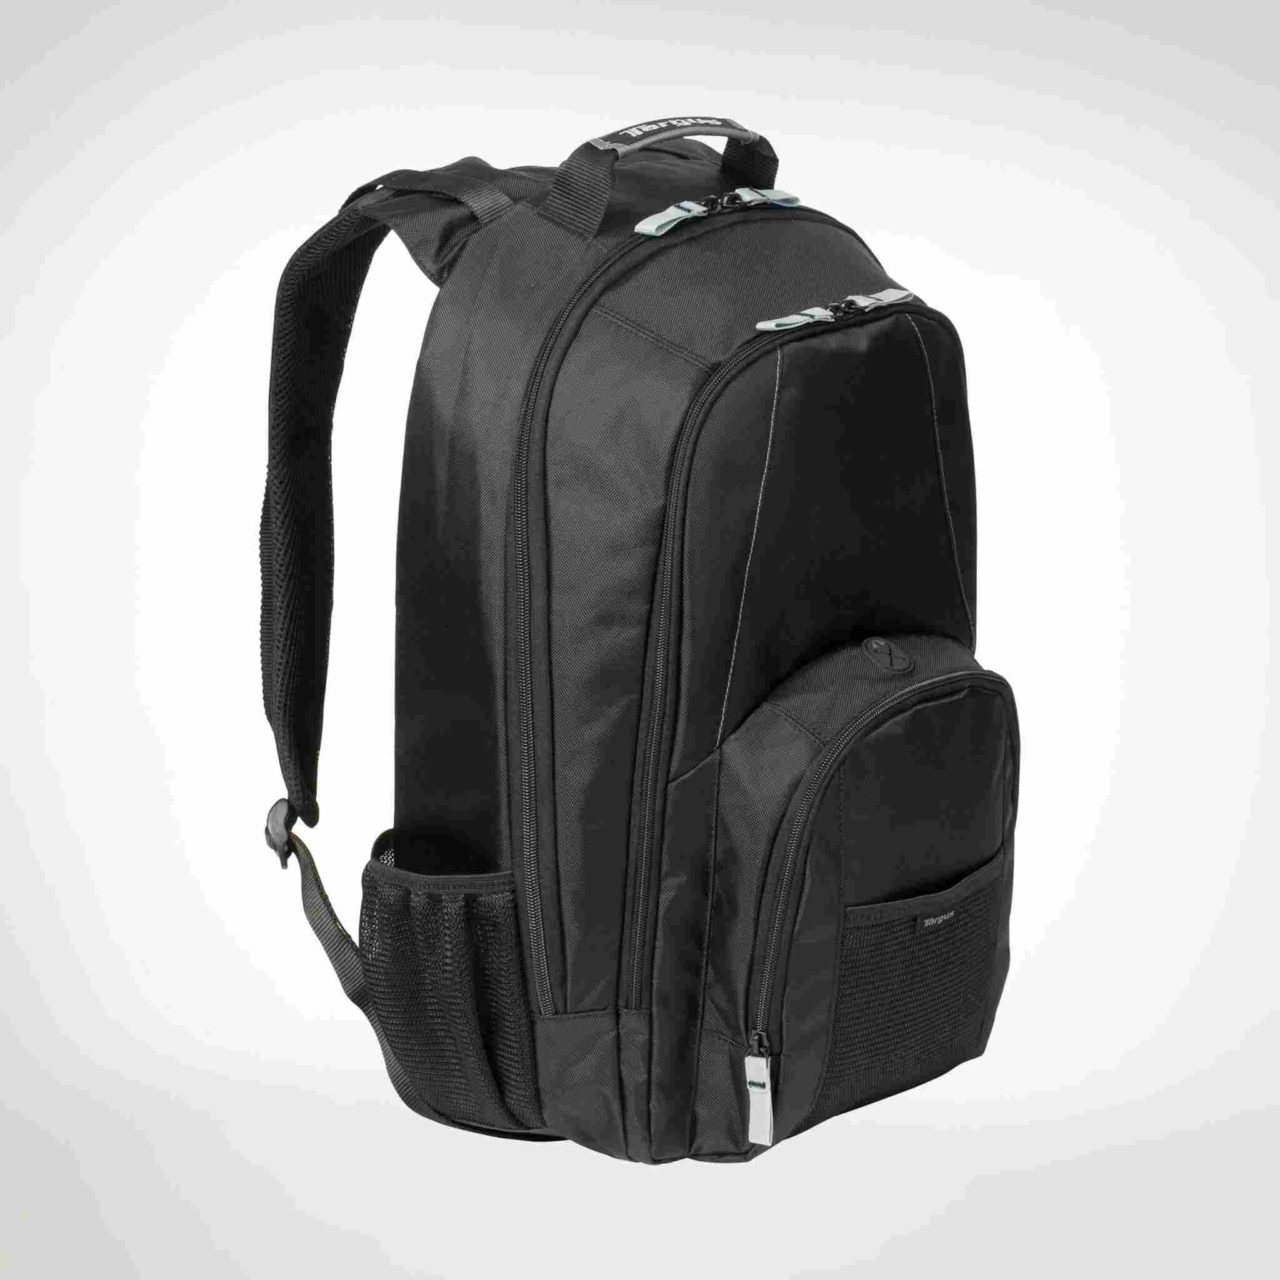 product-backpack-black-1280x1280.jpg